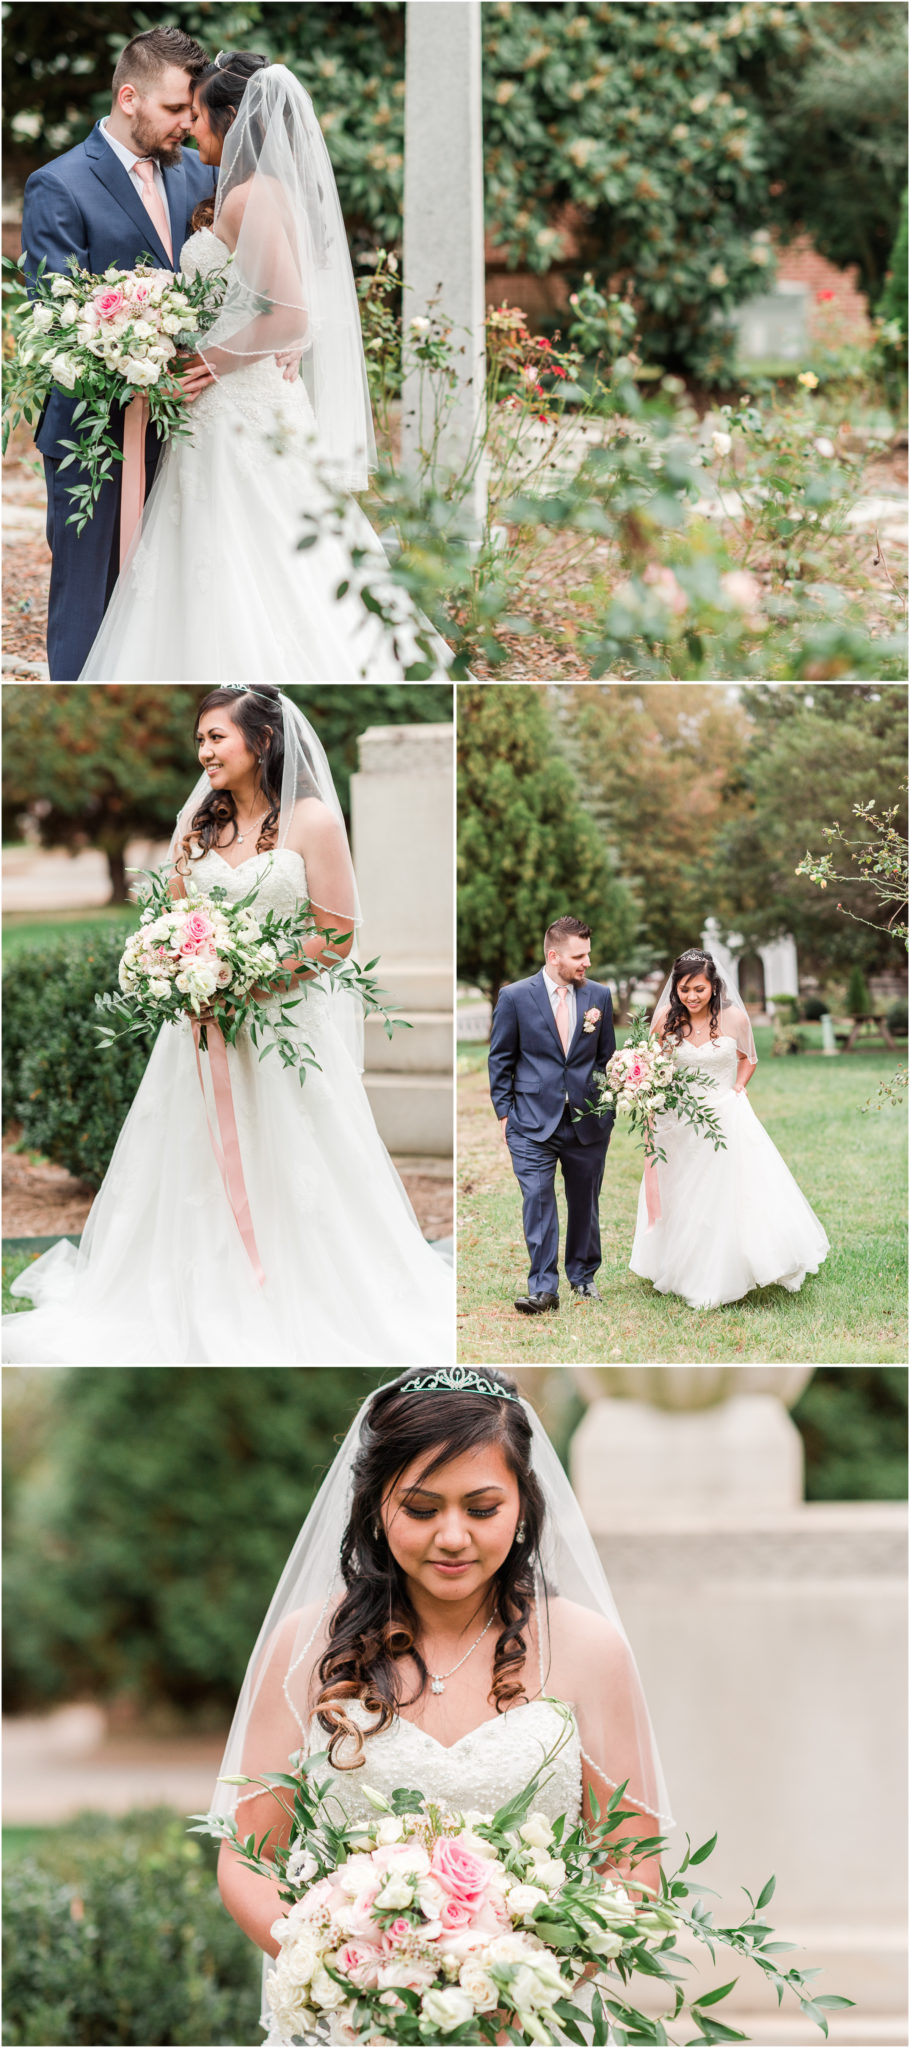 An Elegant Blush Wedding in Greenwood, SC Bride & Groom Photos